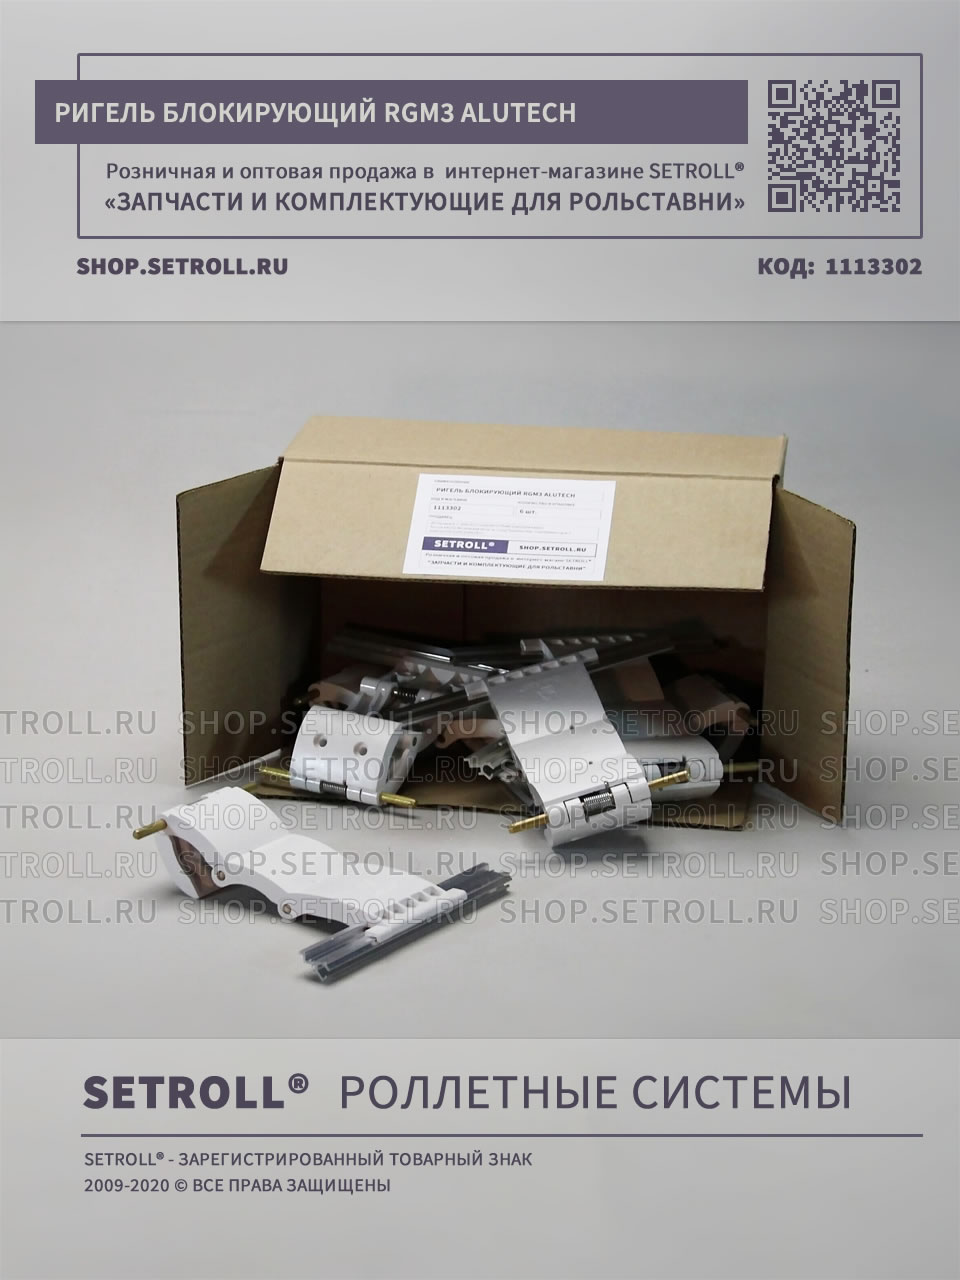 rgm3-alutekh-06-shop.setroll.ru